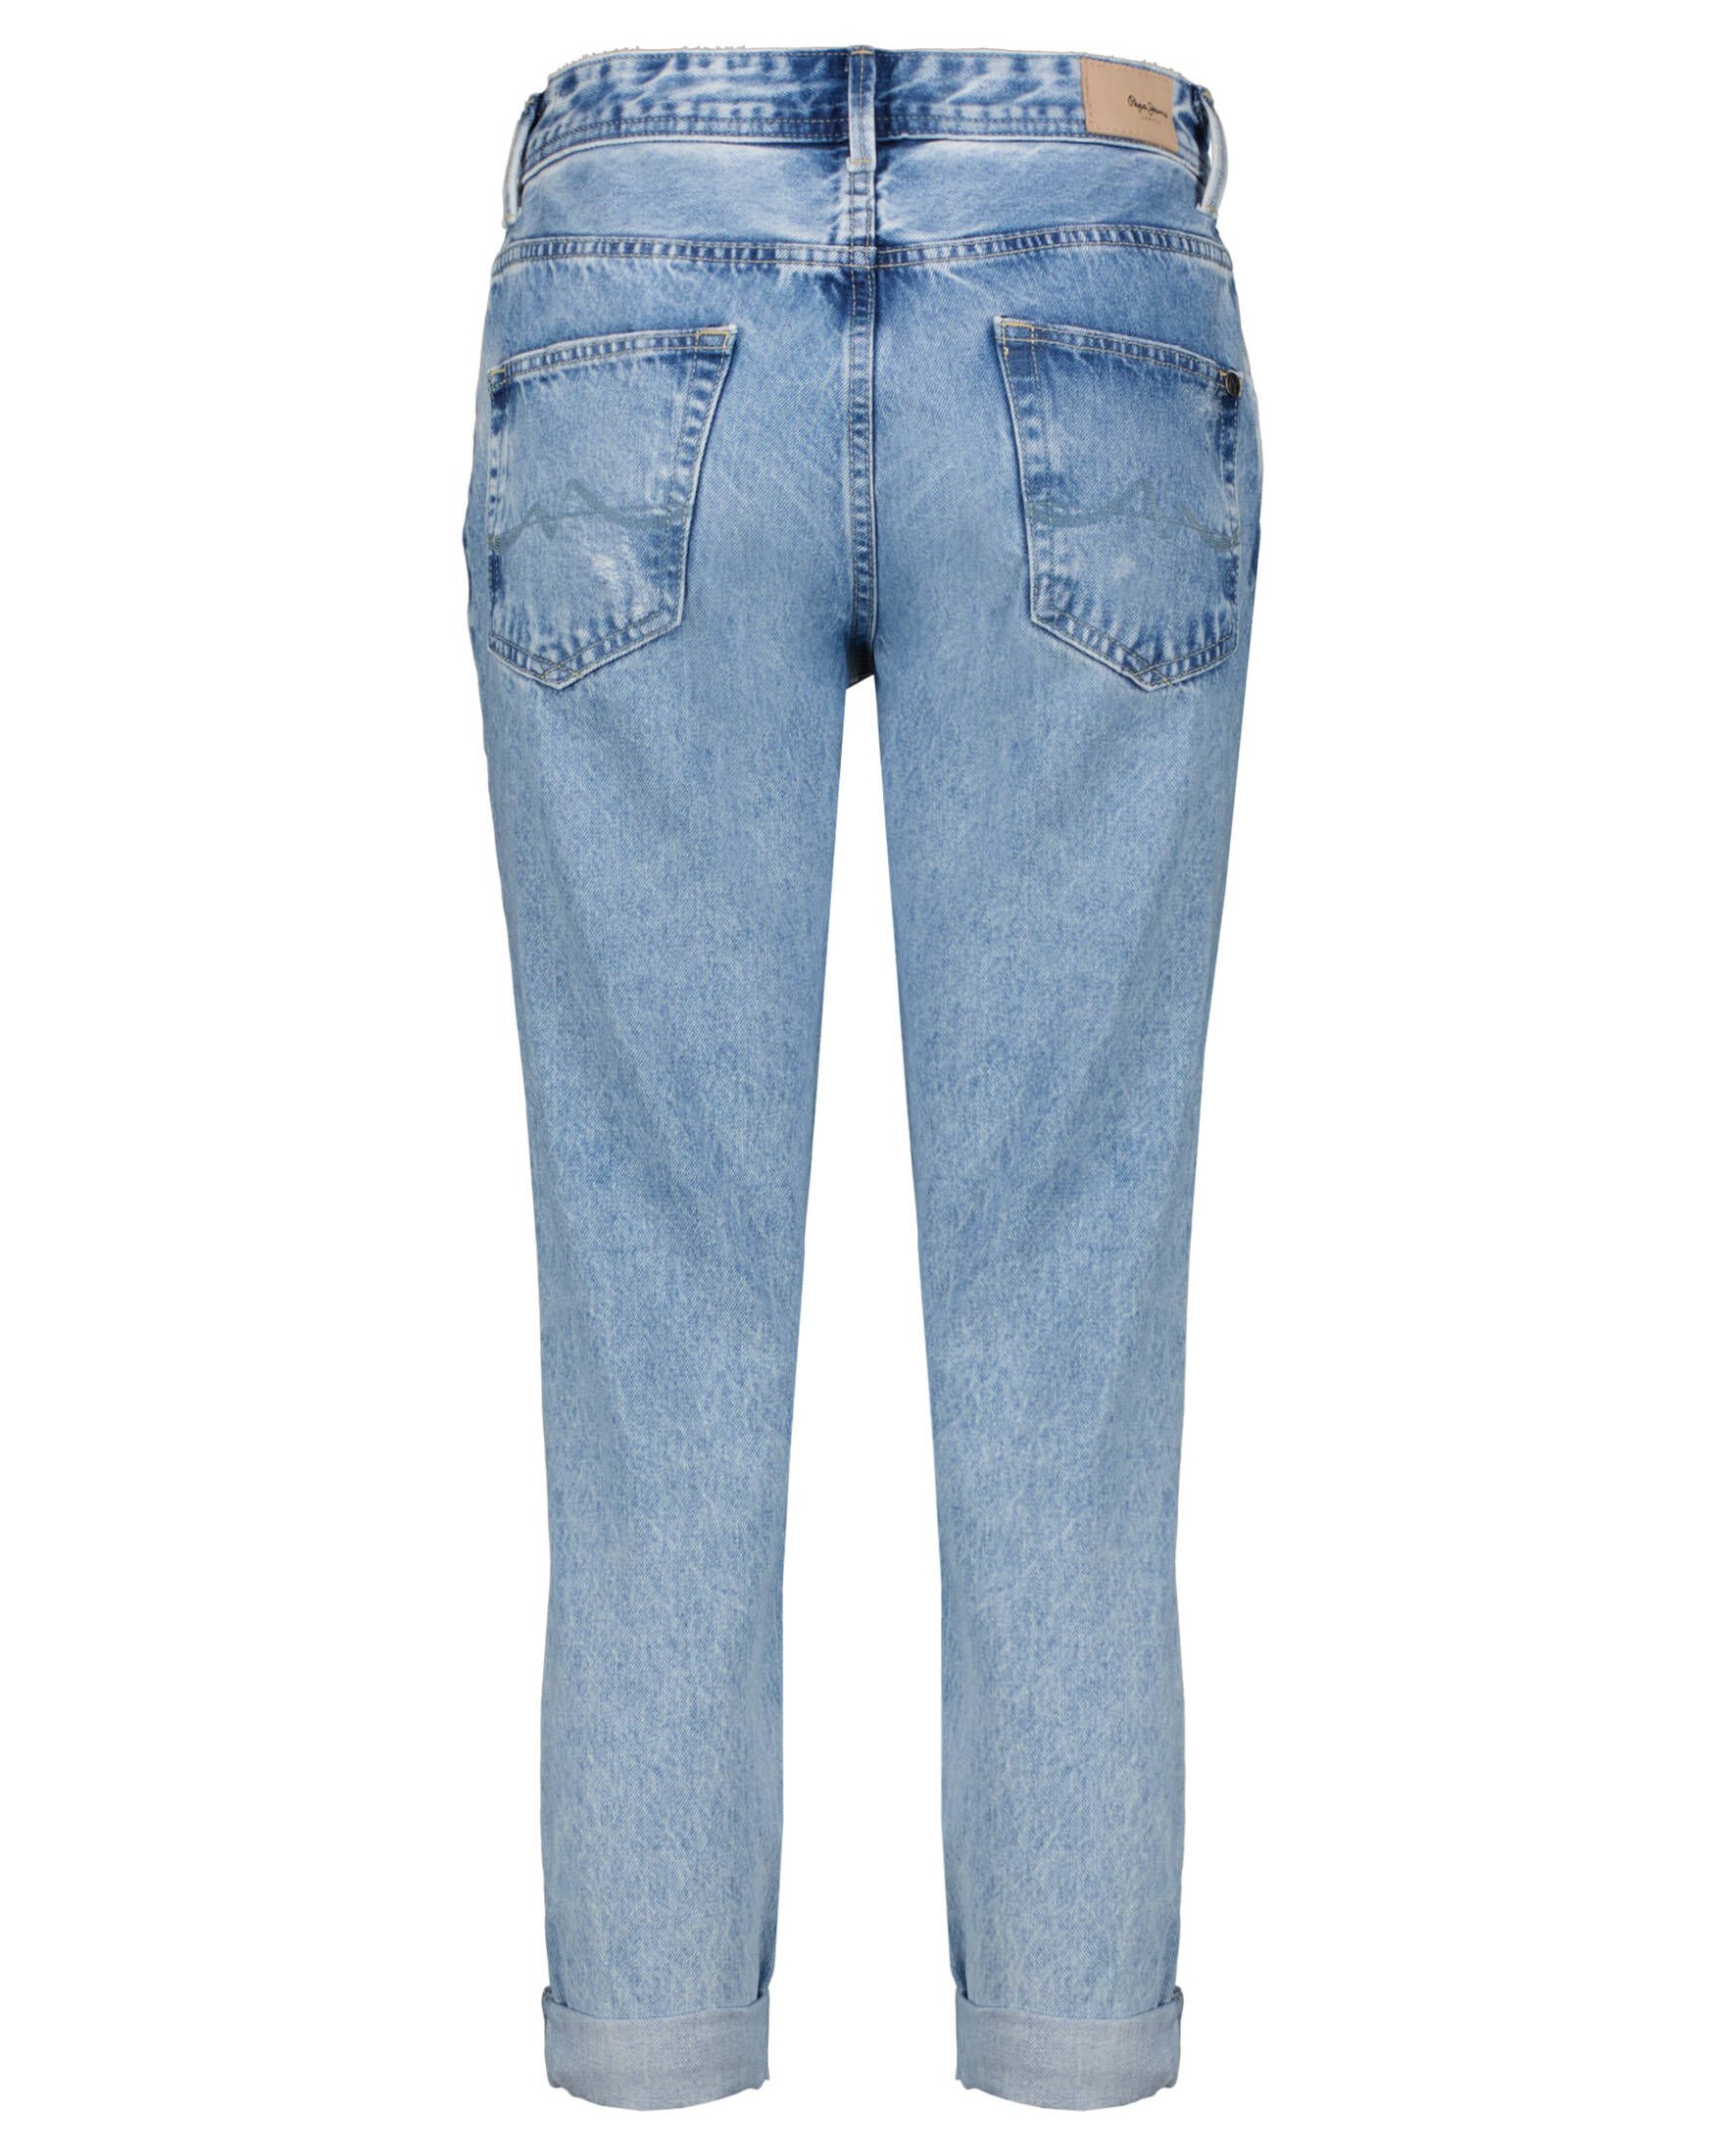 Pepe Jeans Damen Jeans Straight Fit VIOLET engelhorn kaufen 